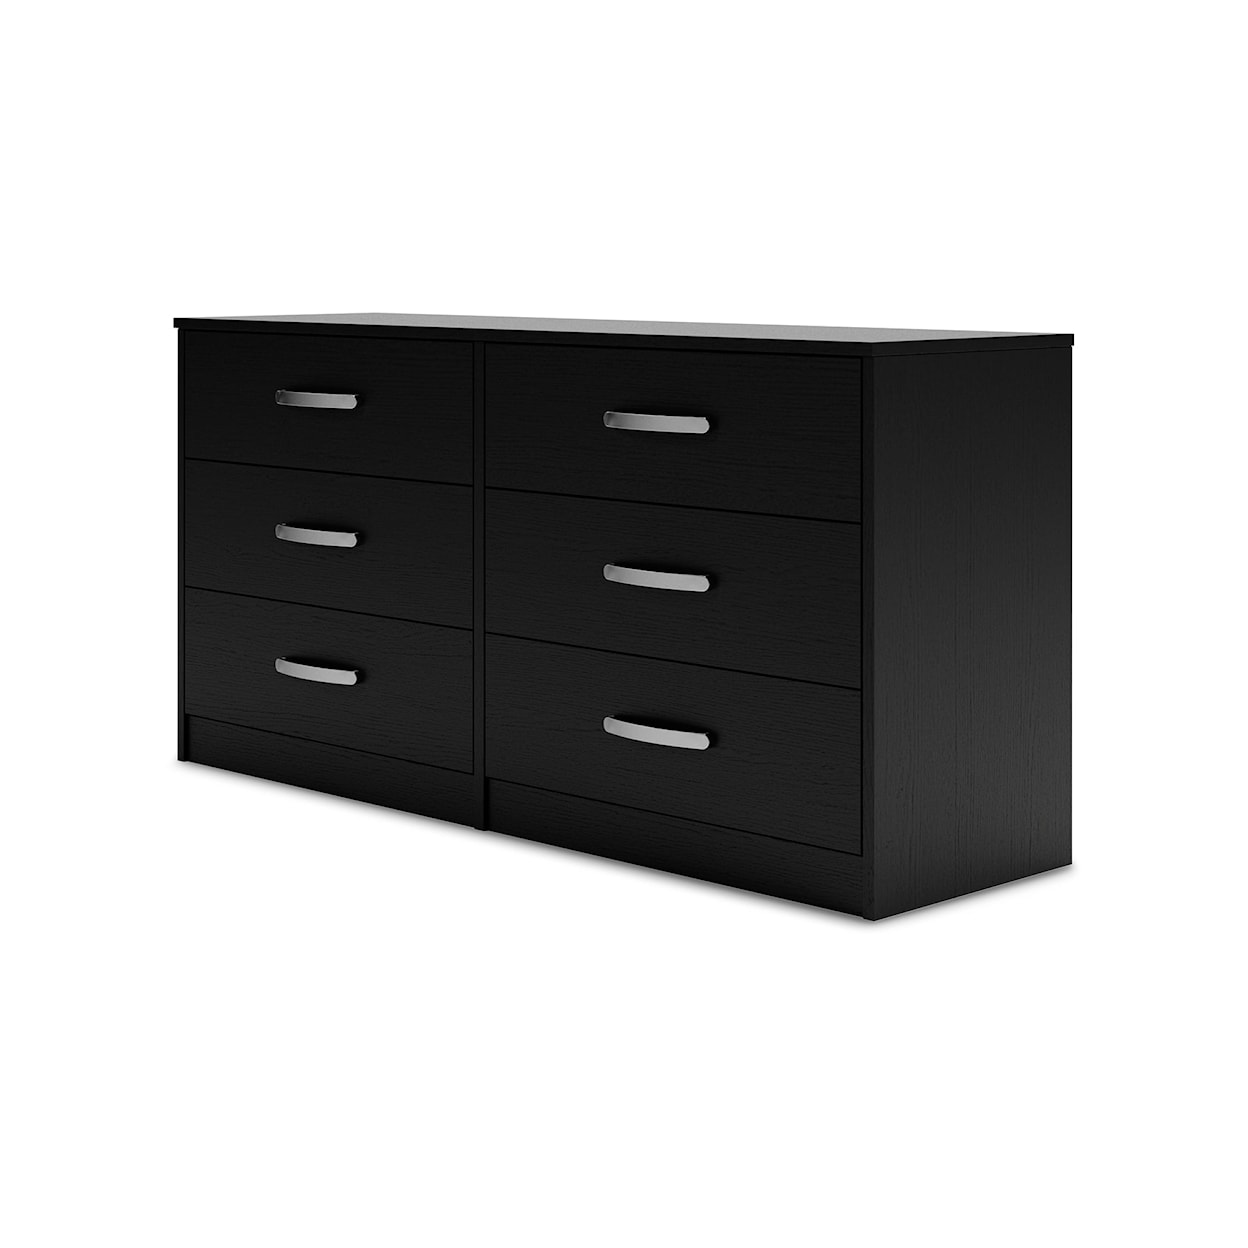 Ashley Furniture Signature Design Finch 6-Drawer Dresser